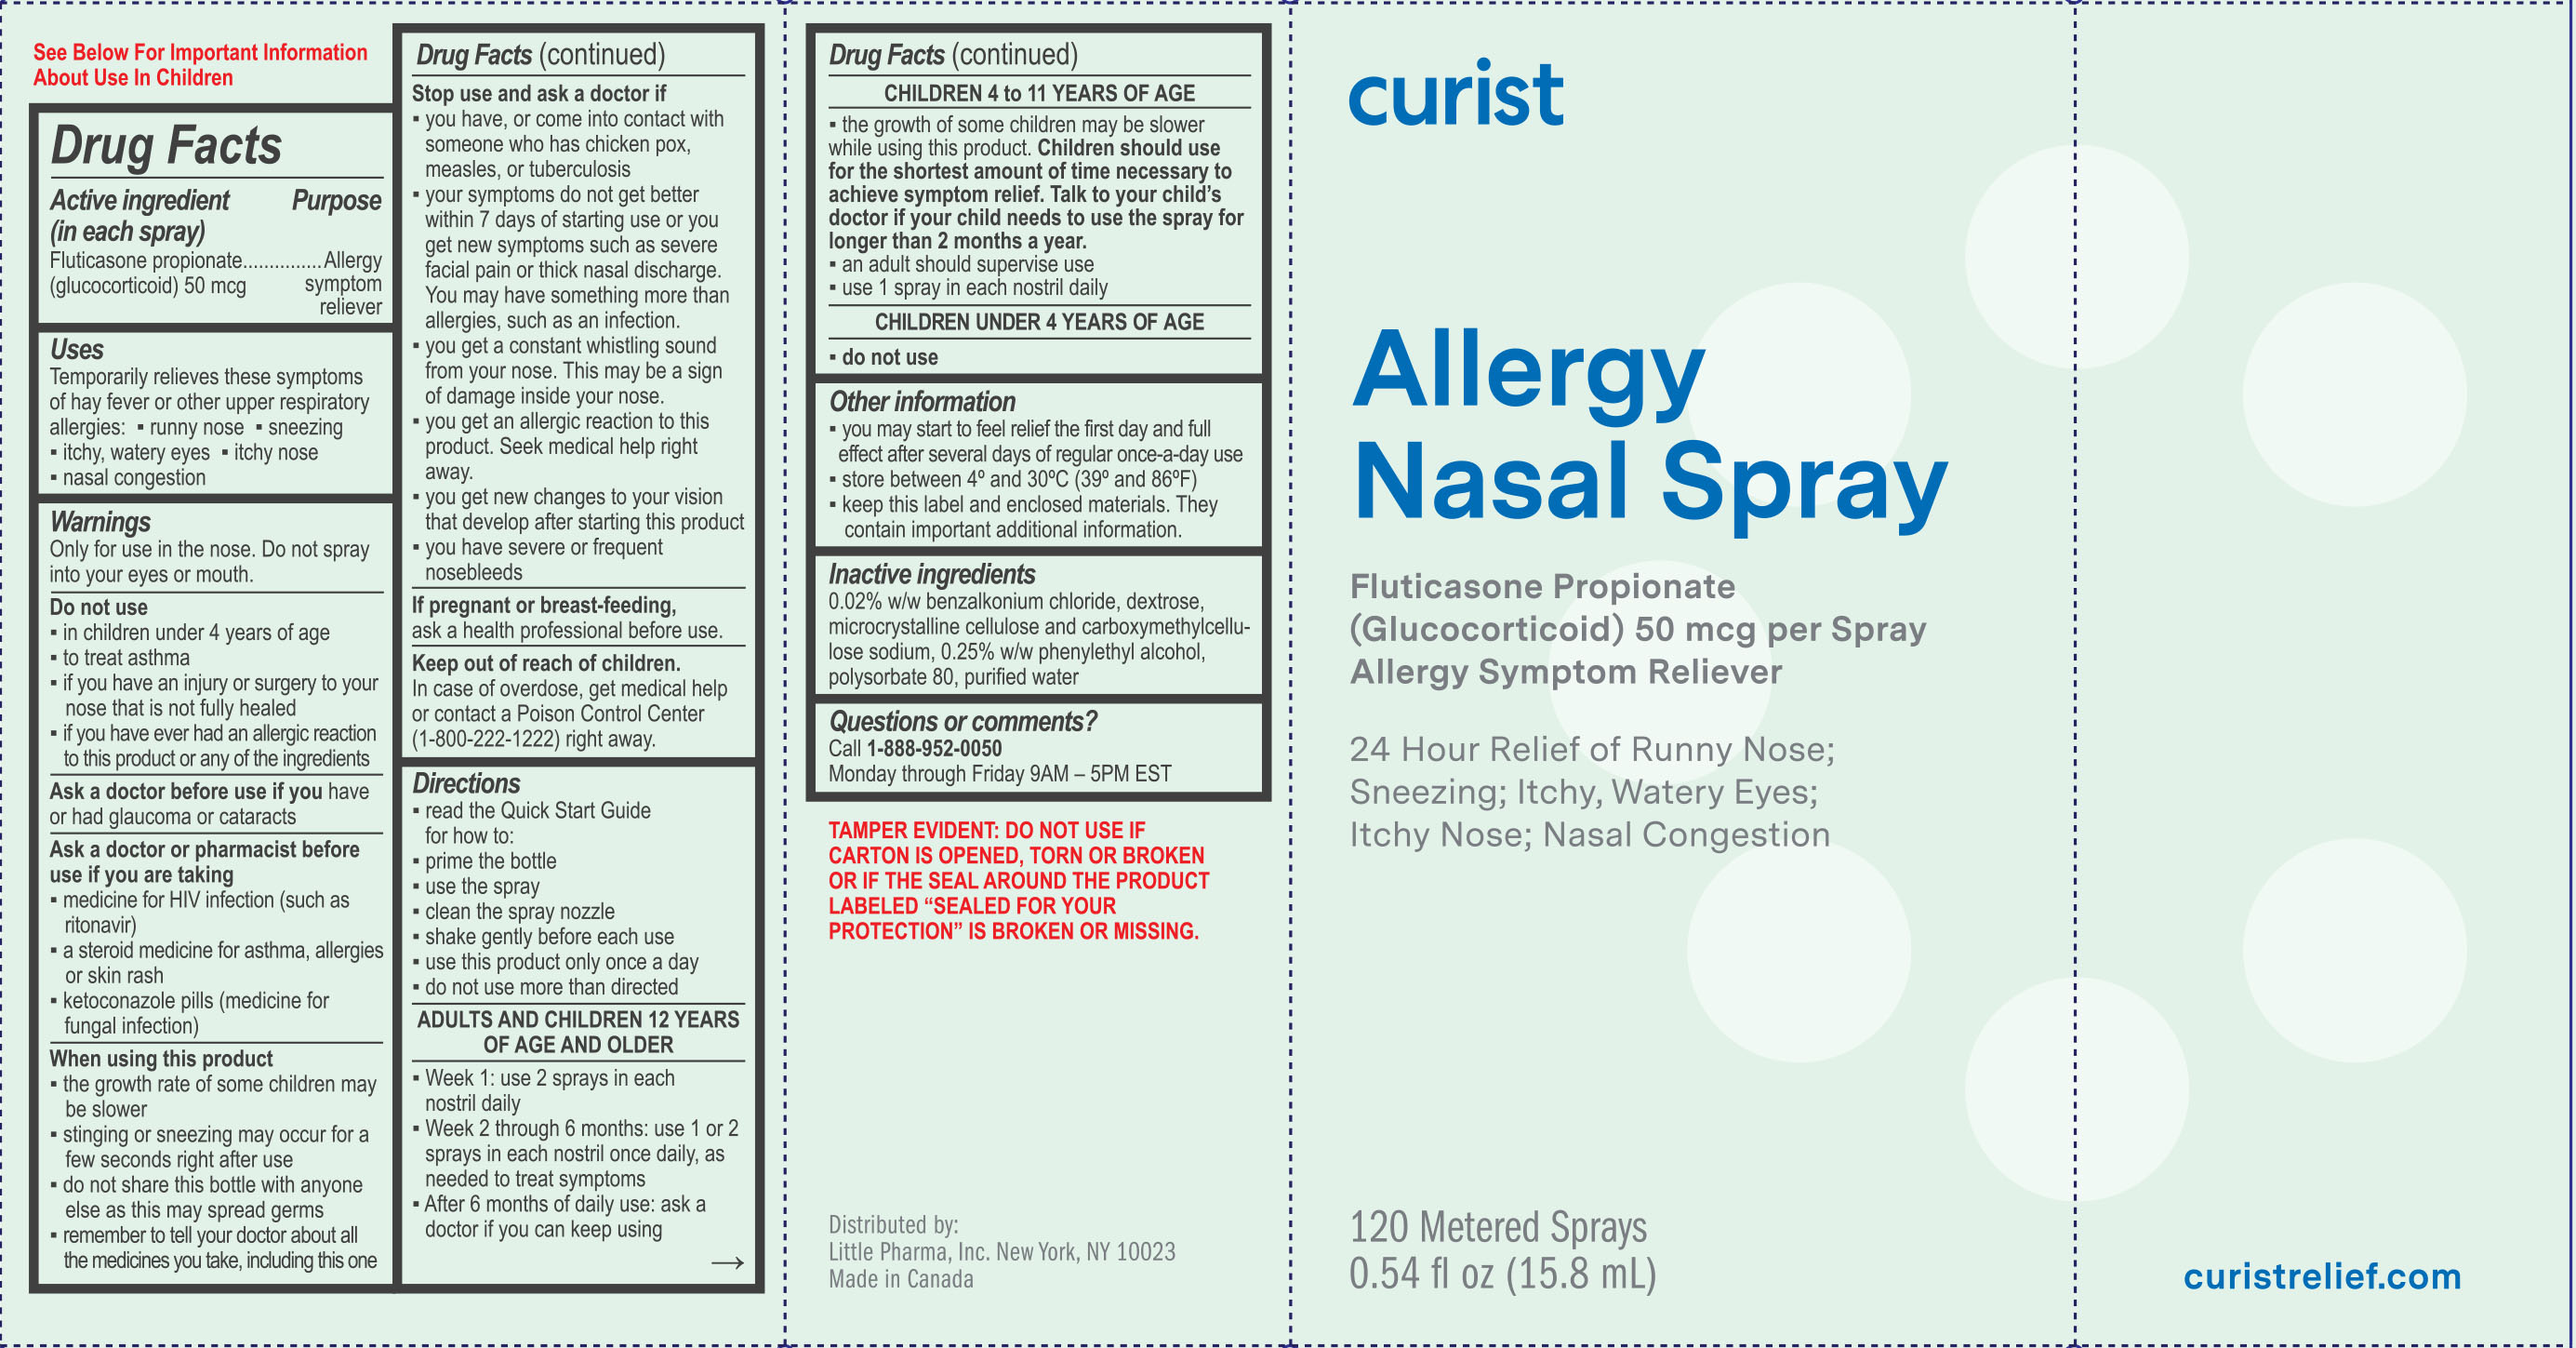 Allergy Nasal Spray